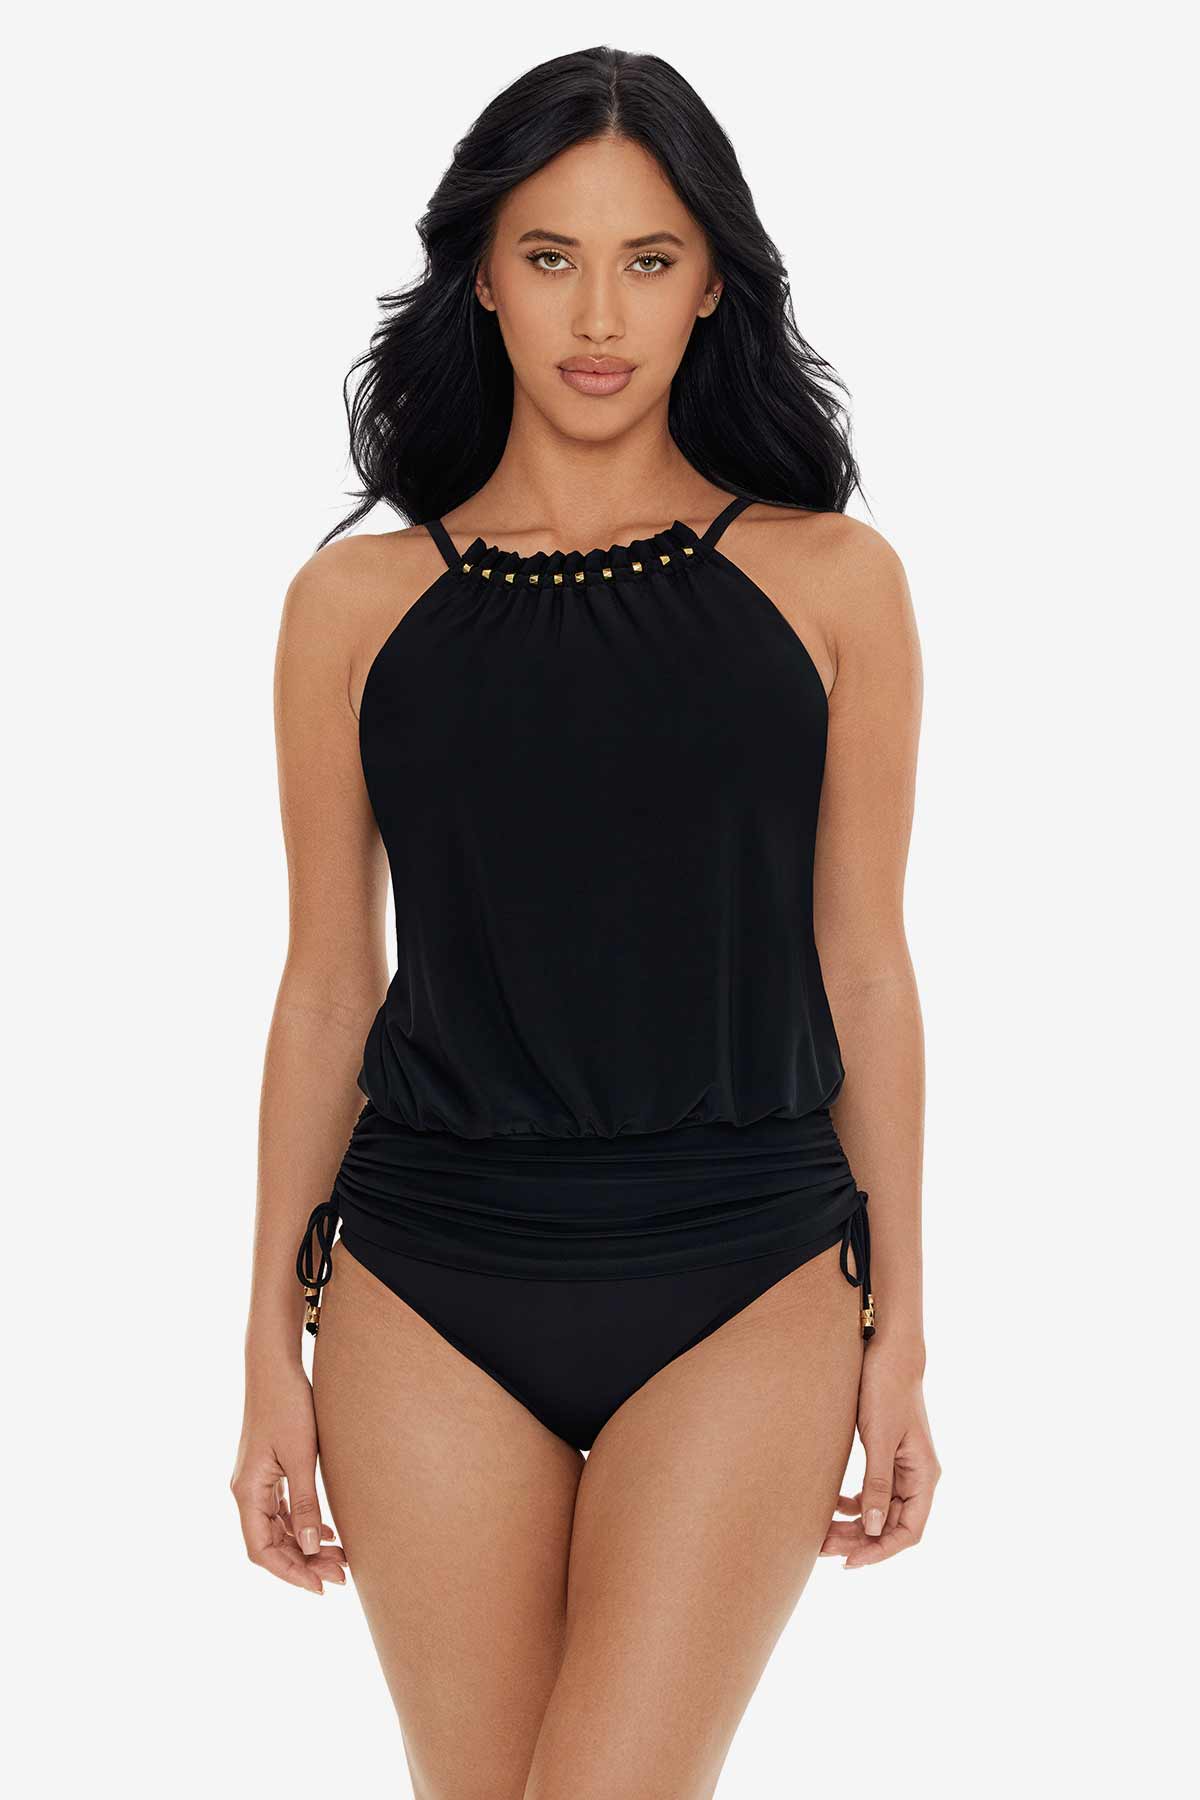 Cali Chic Junior's Swimsuit Celebrity Grayish Sports Bra Tankini Swimsuit  with Black Vest NEW! HOT!